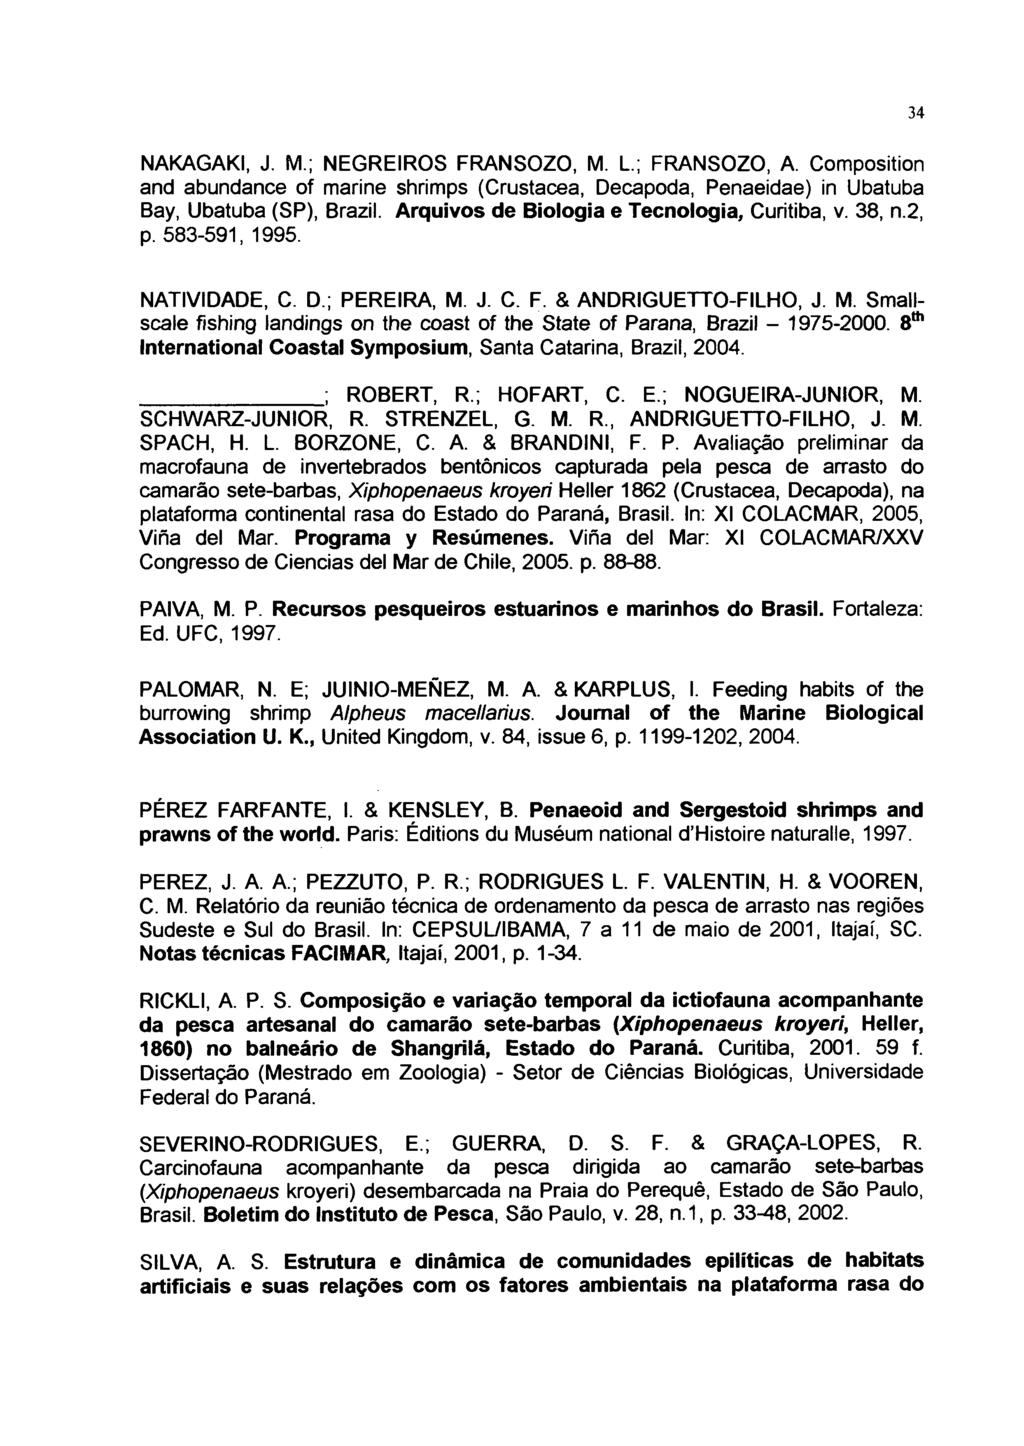 34 NAKAGAKI, J. M.; NEGREIROS FRANSOZO, M. L.; FRANSOZO, A. Composition and abundance of marine shrimps (Crustacea, Decapoda, Penaeidae) in Ubatuba Bay, Ubatuba (SP), Brazil.